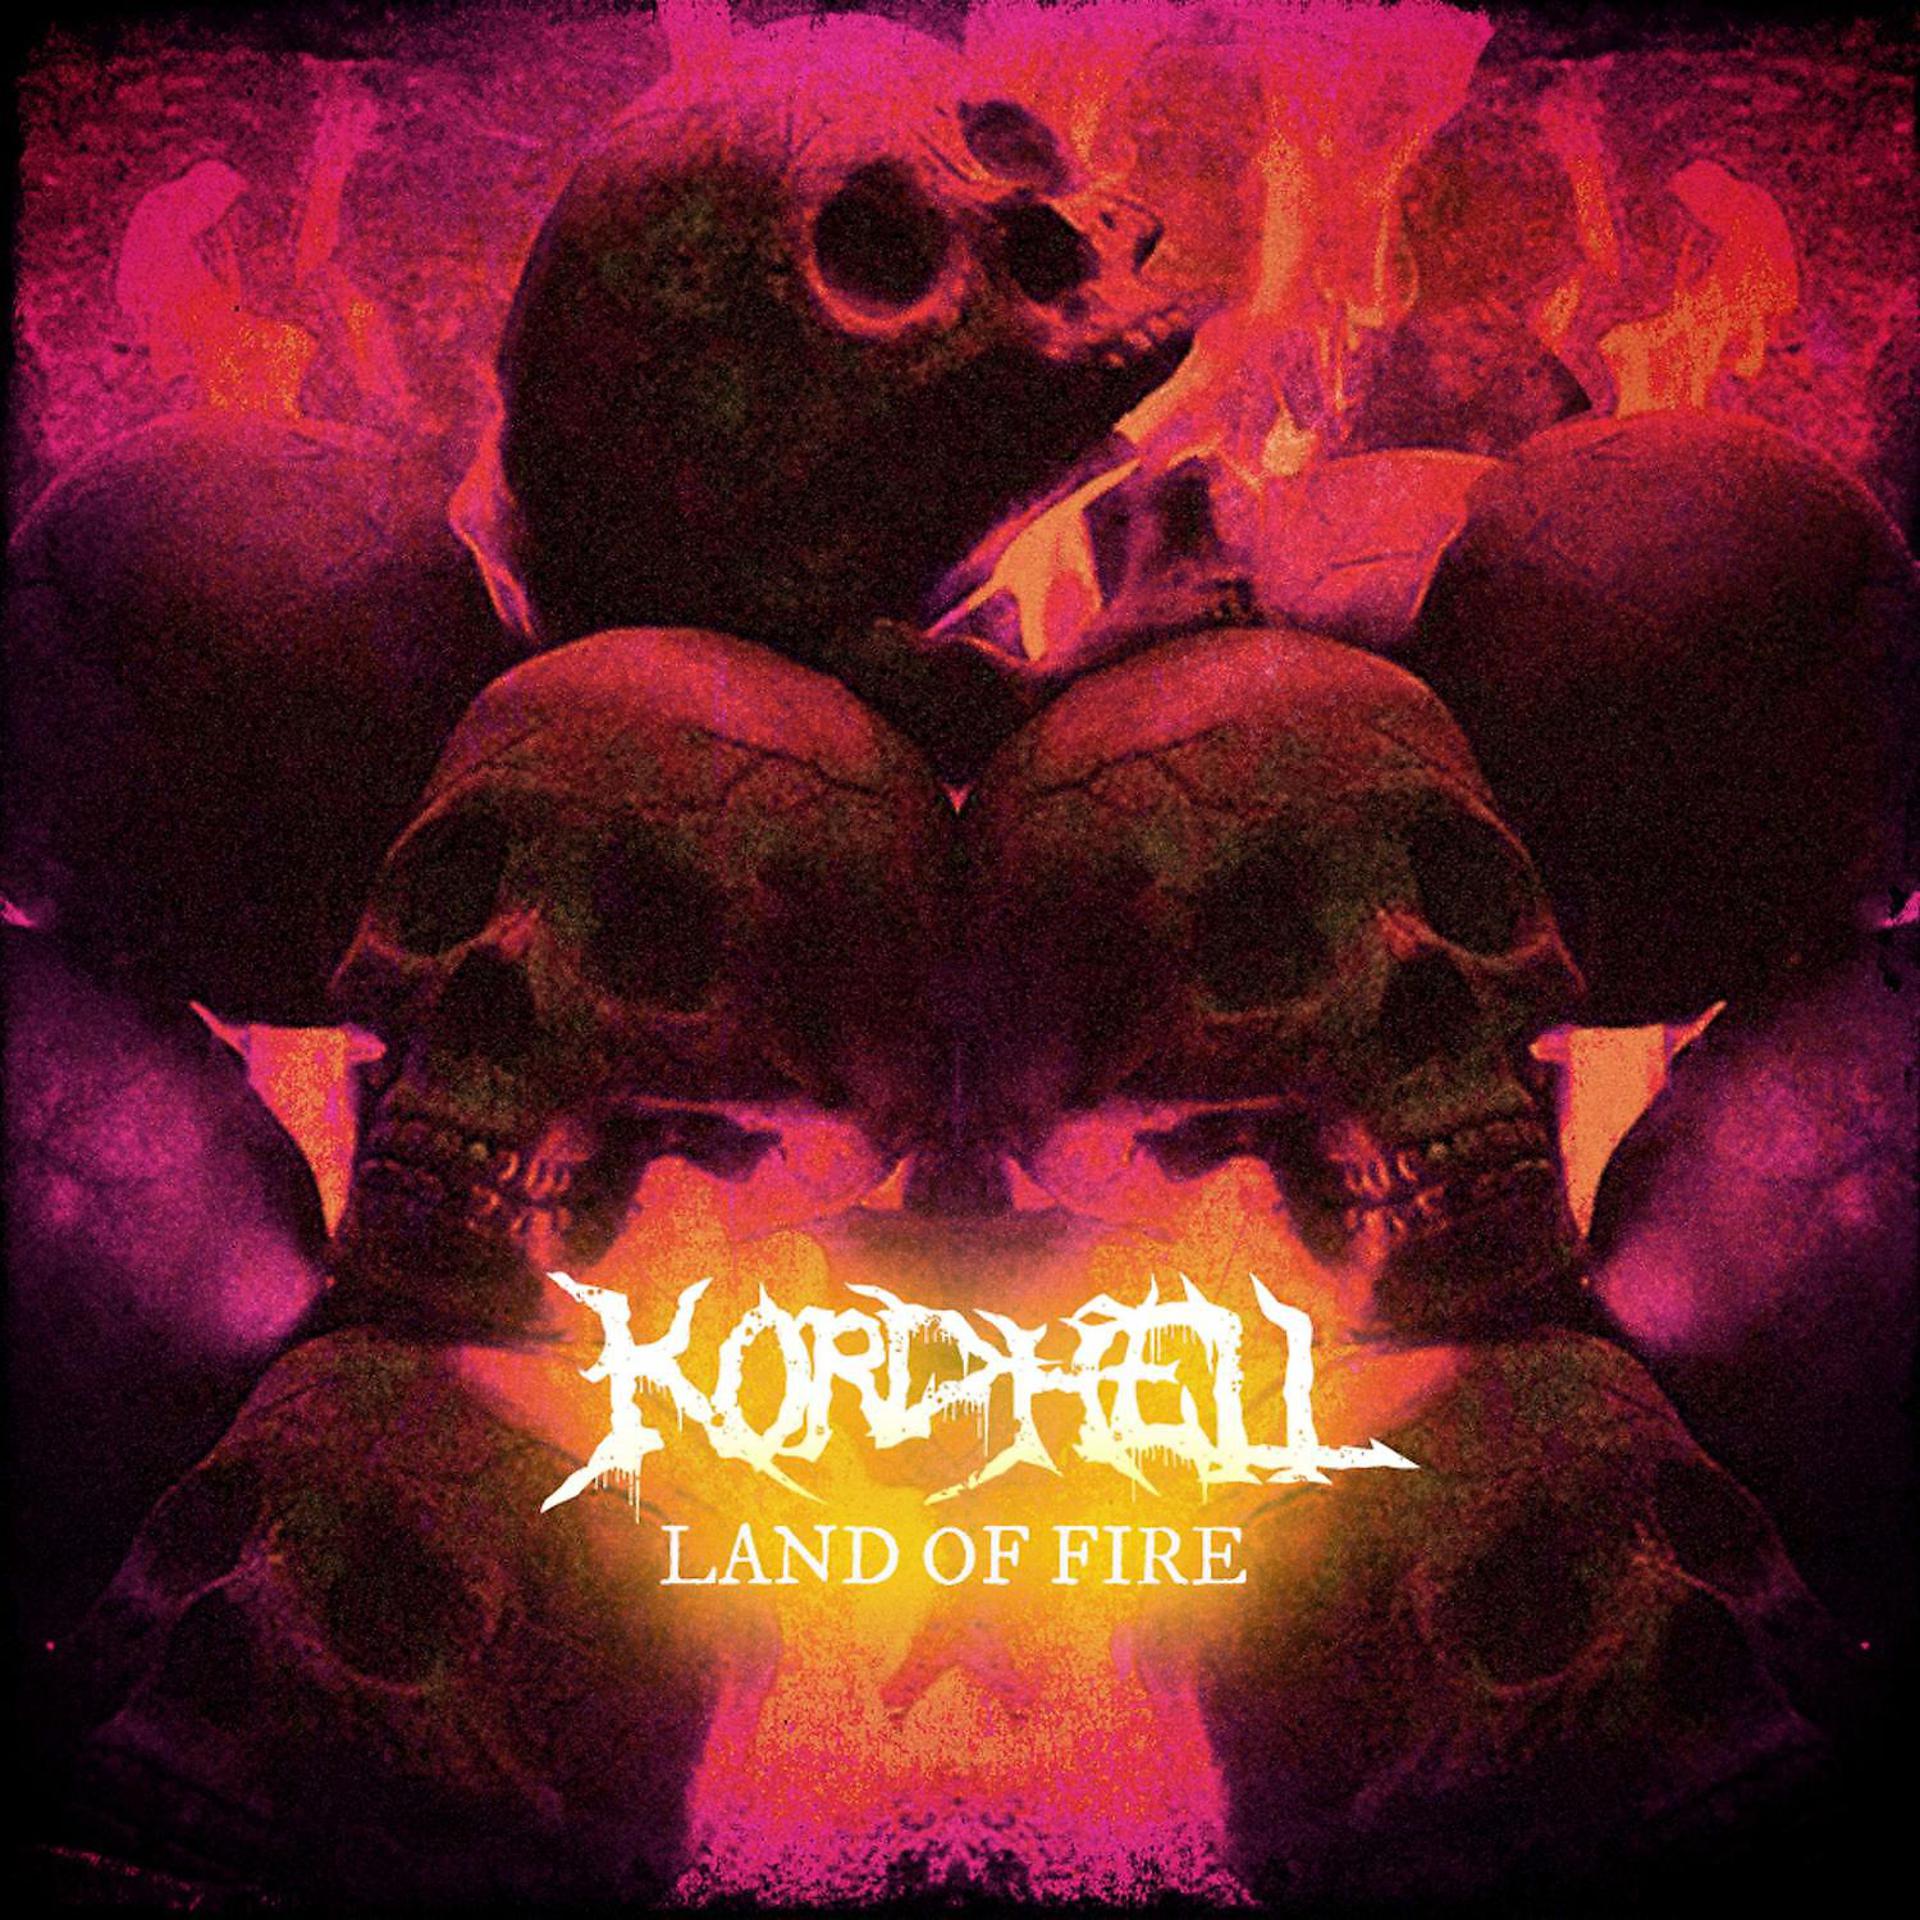 Постер к треку Kordhell - LAND OF FIRE